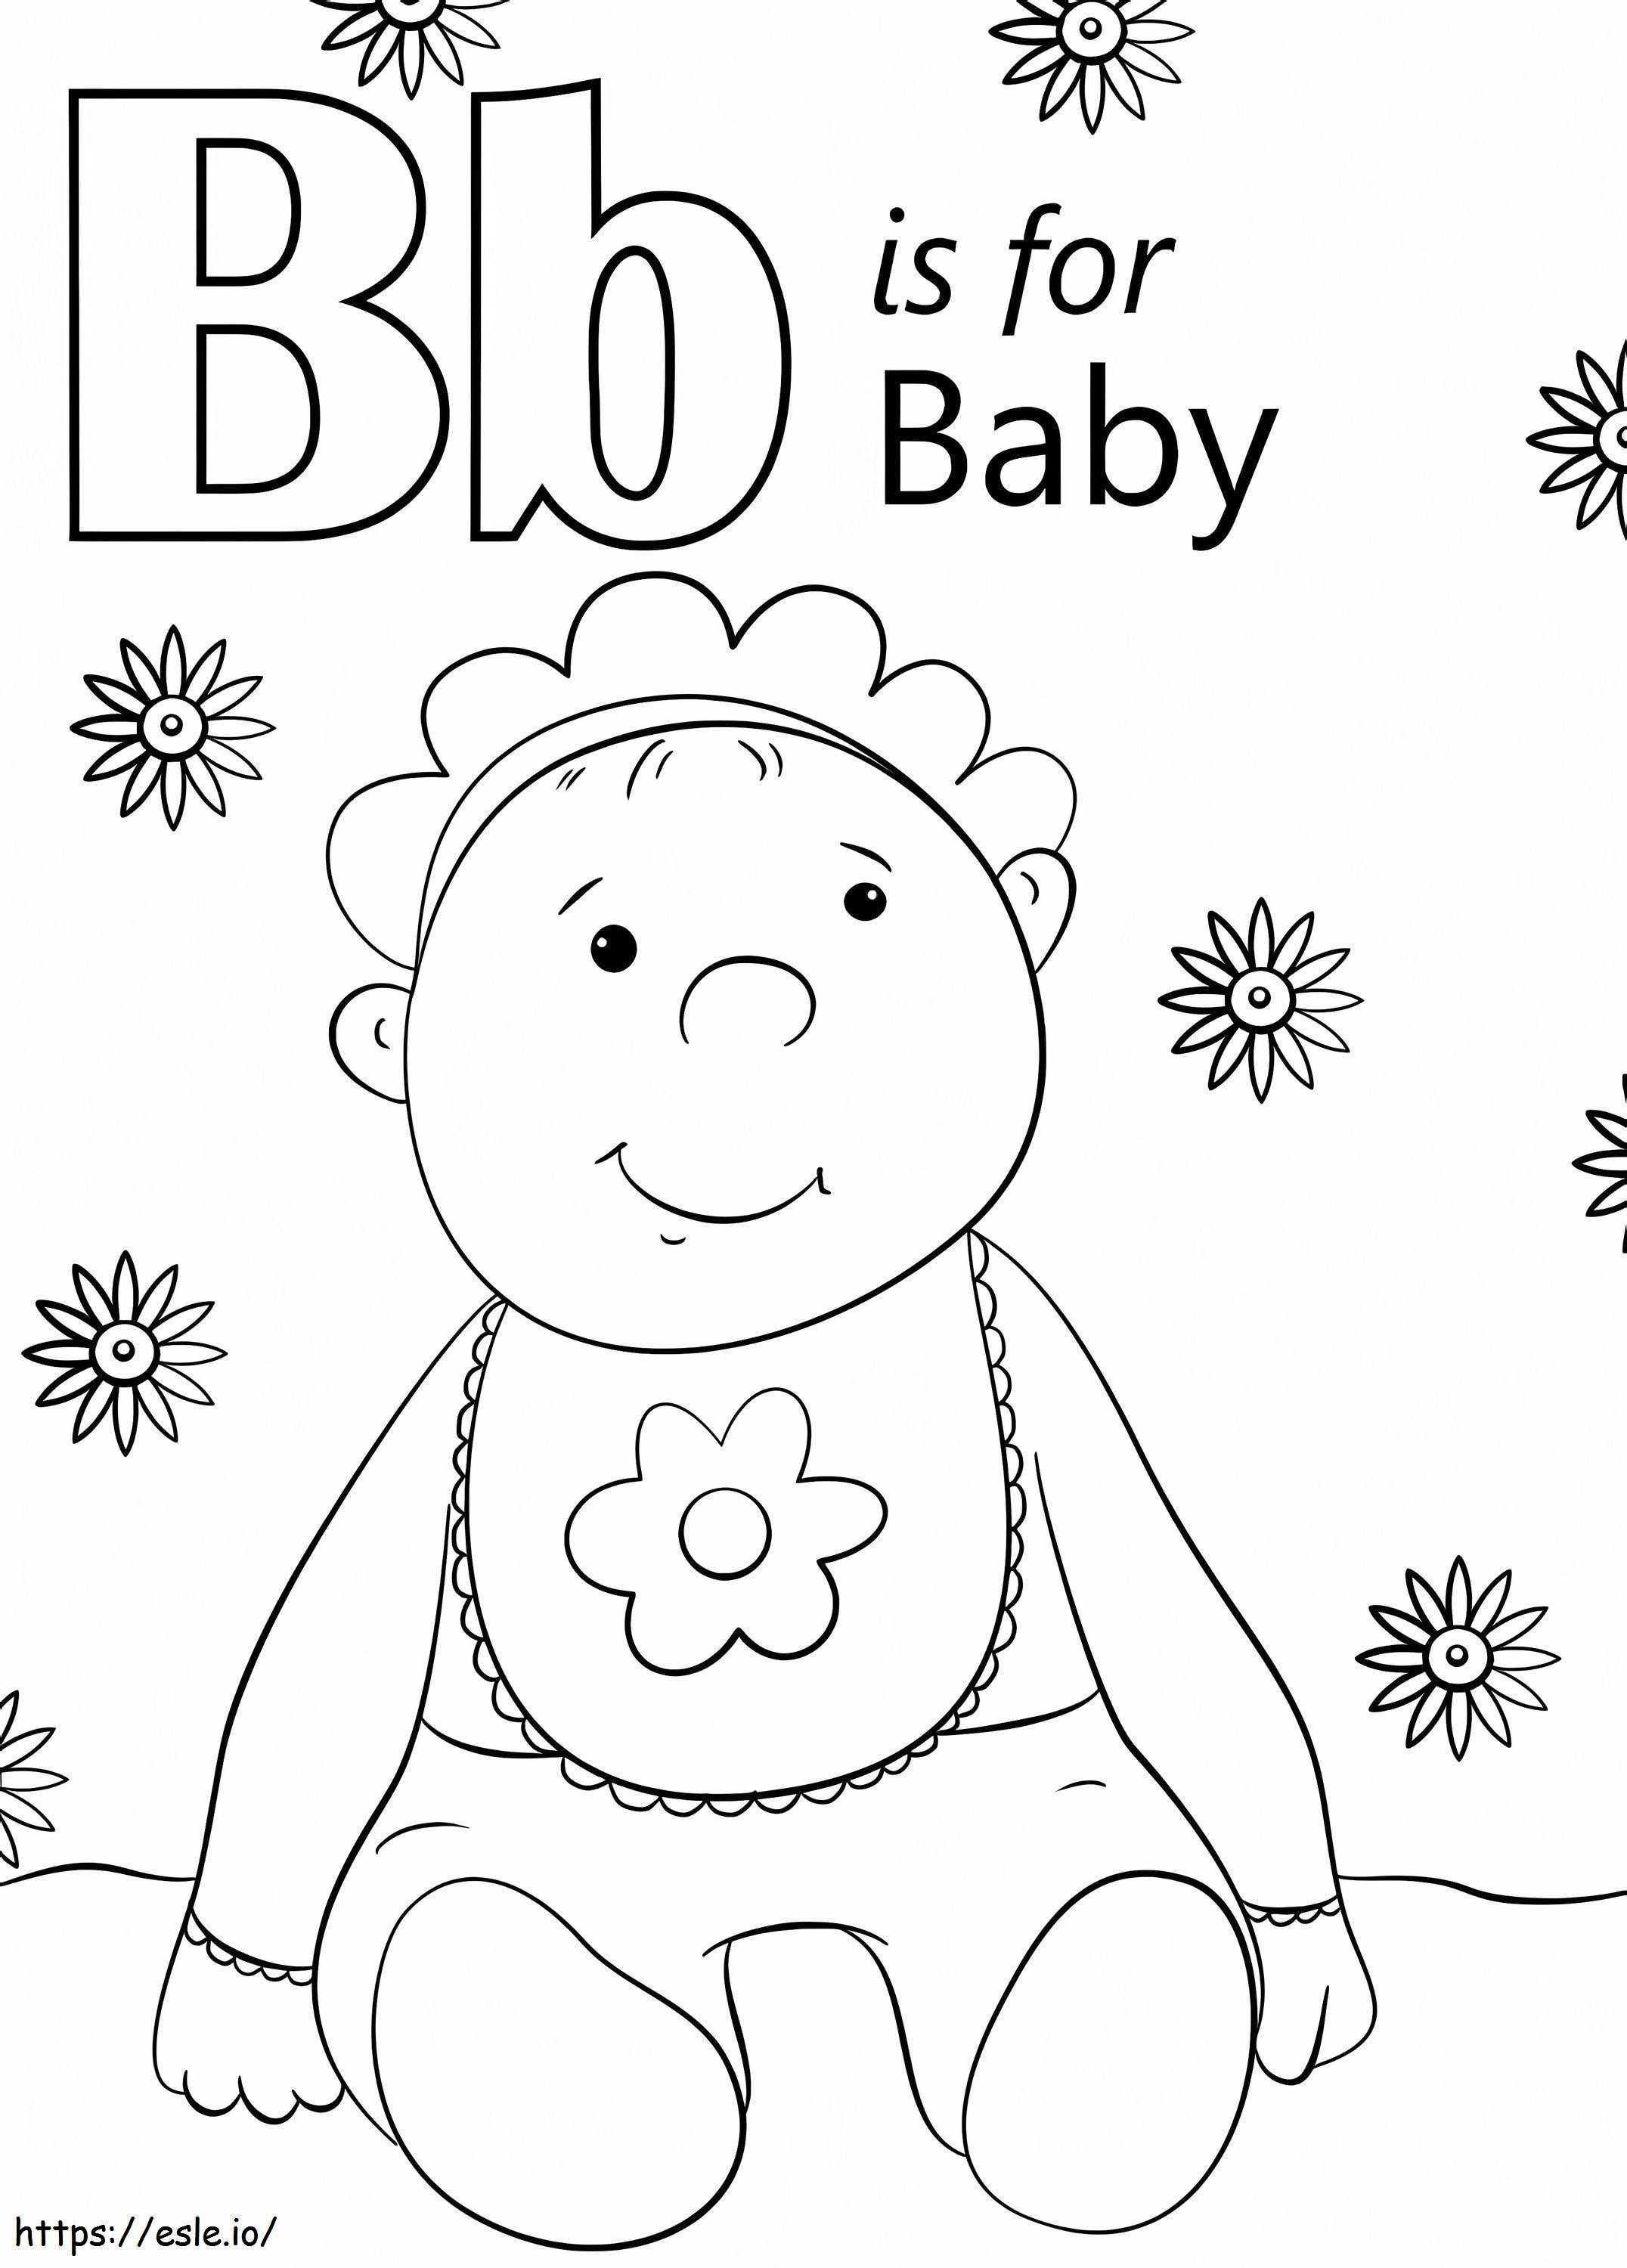 Letra B do bebê para colorir